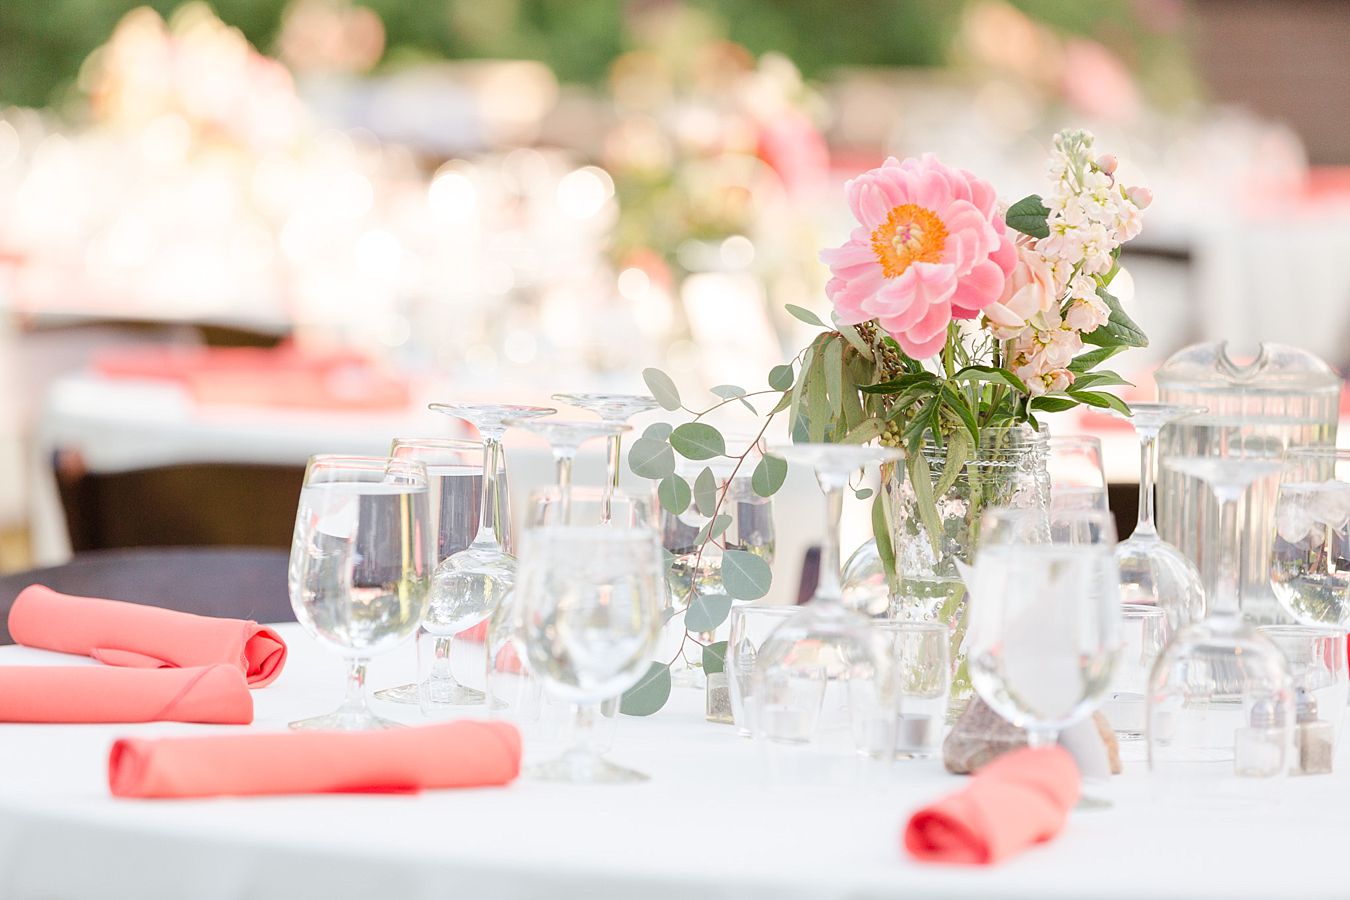 tucson outdoor reception venue, coral wedding colors decorations